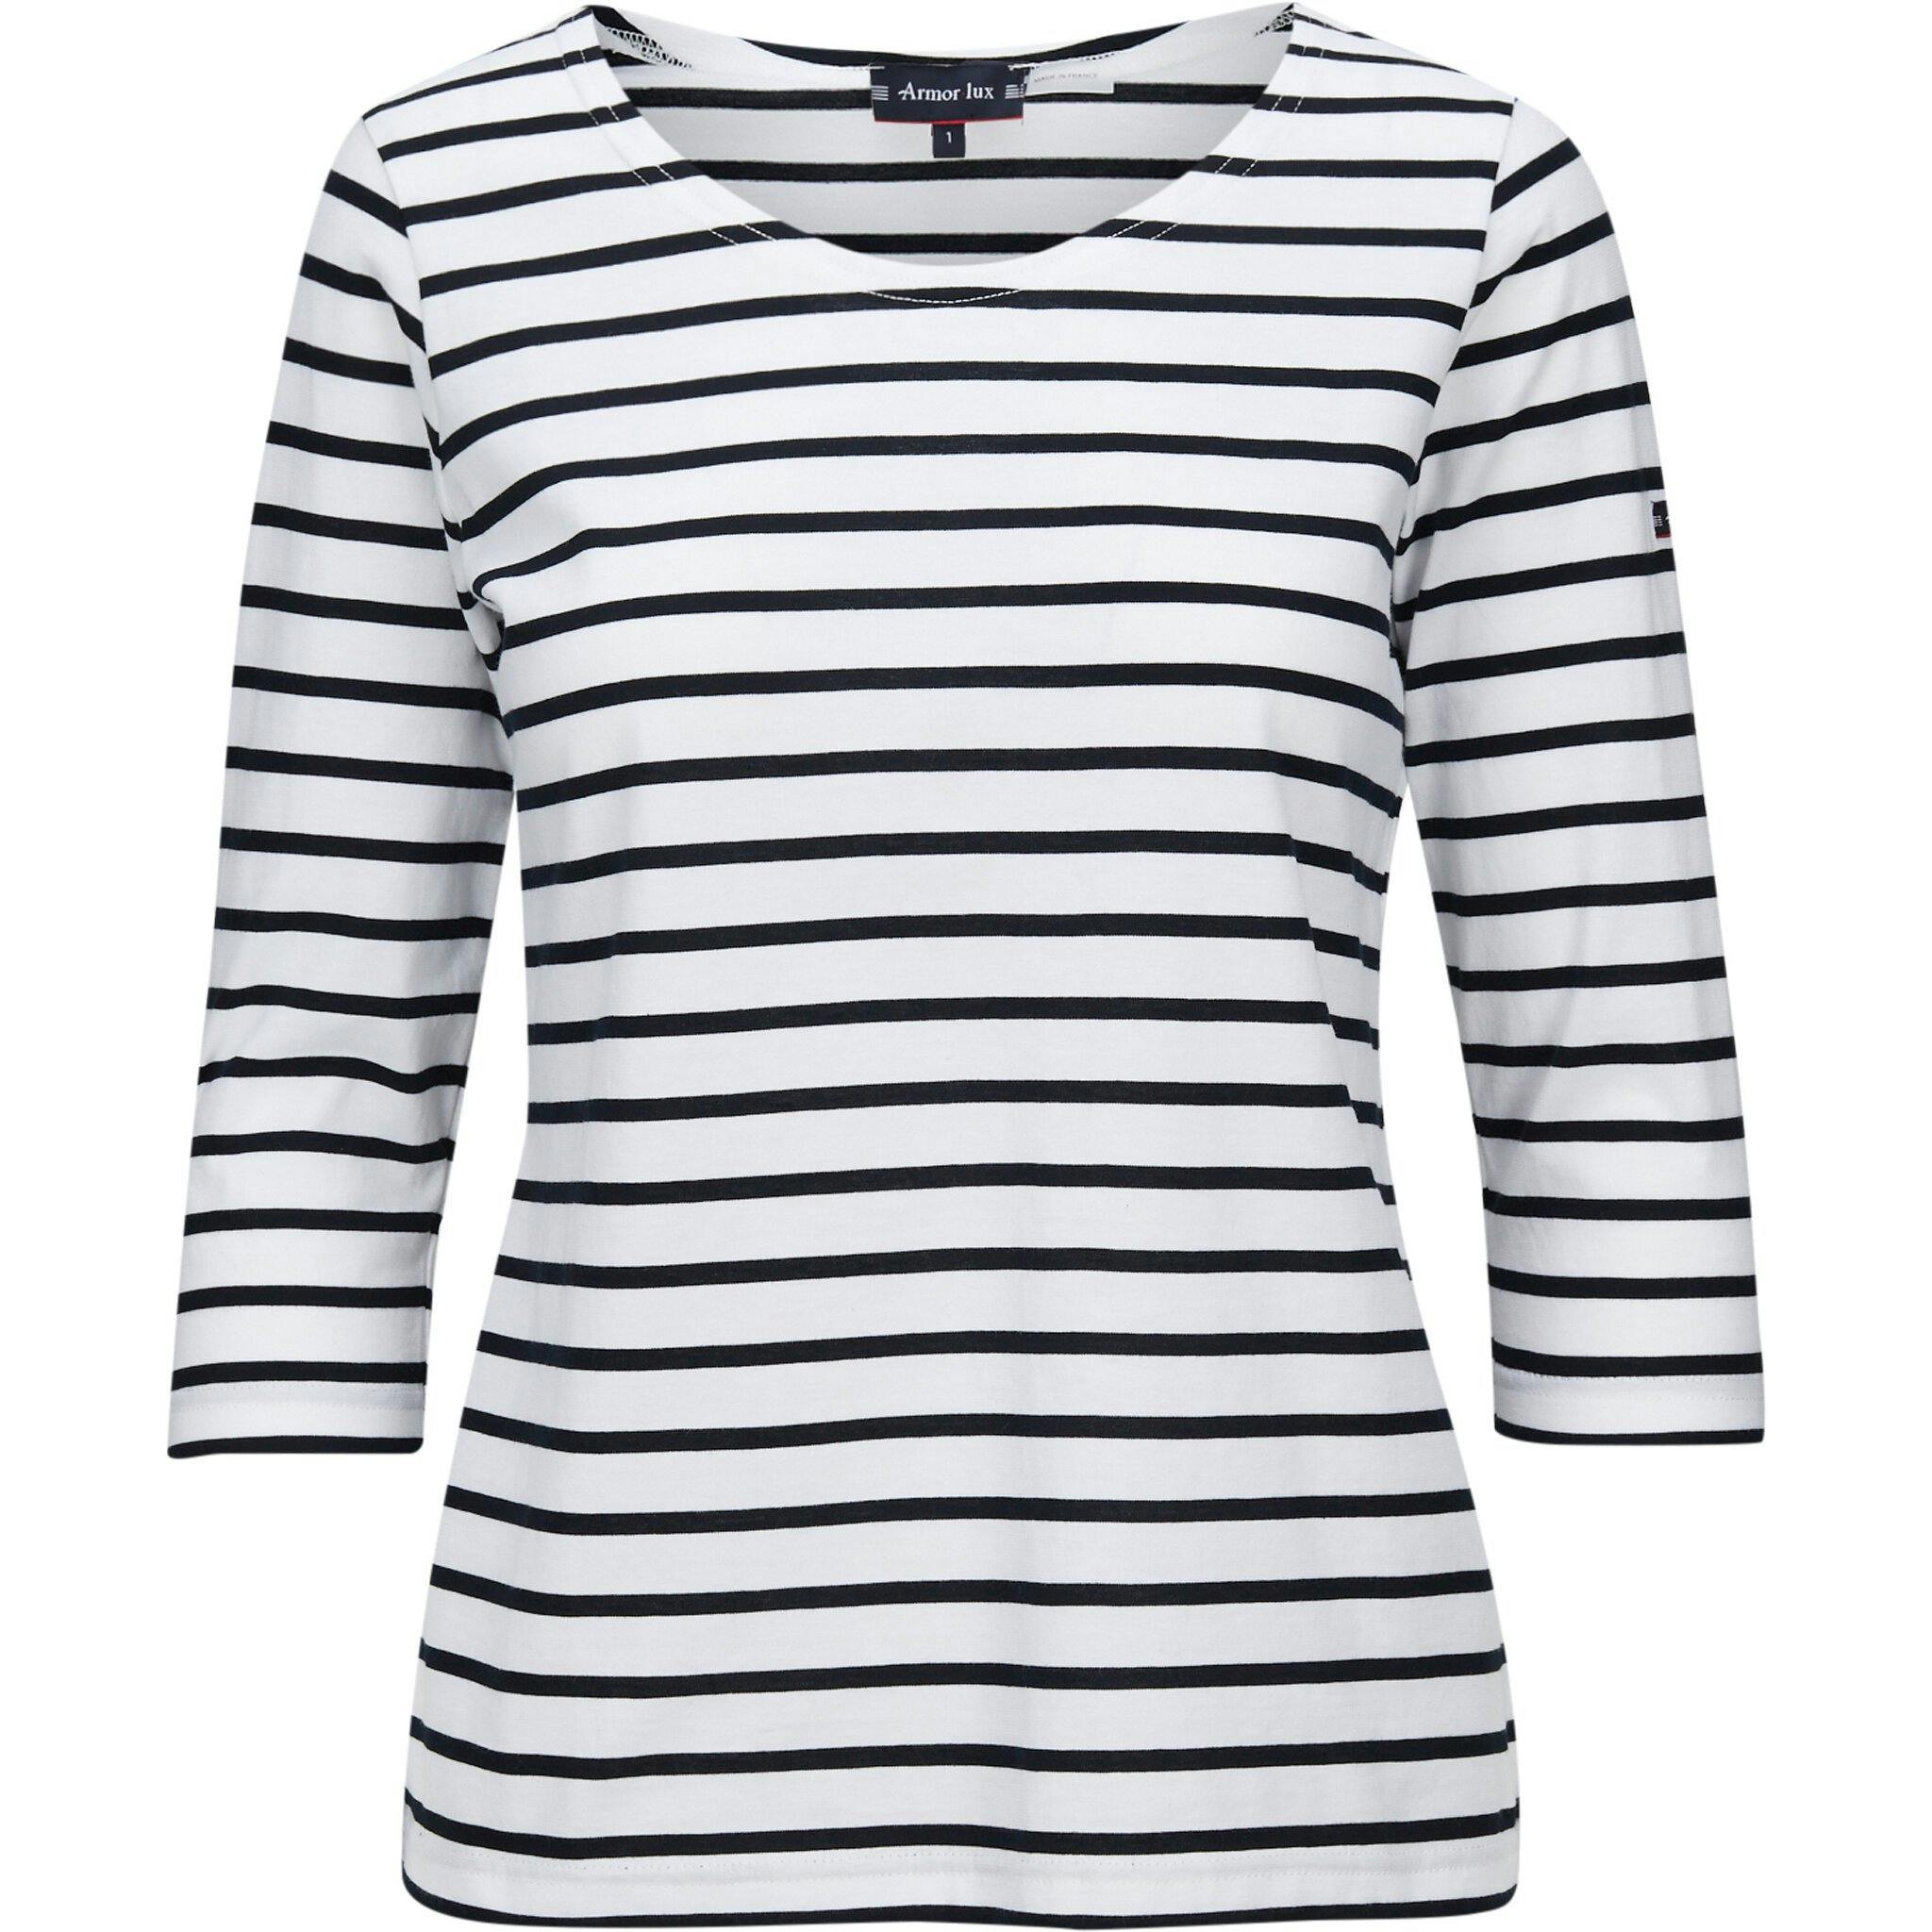 Product image for Cap Coz Breton Striped Cotton Jersey - Women's